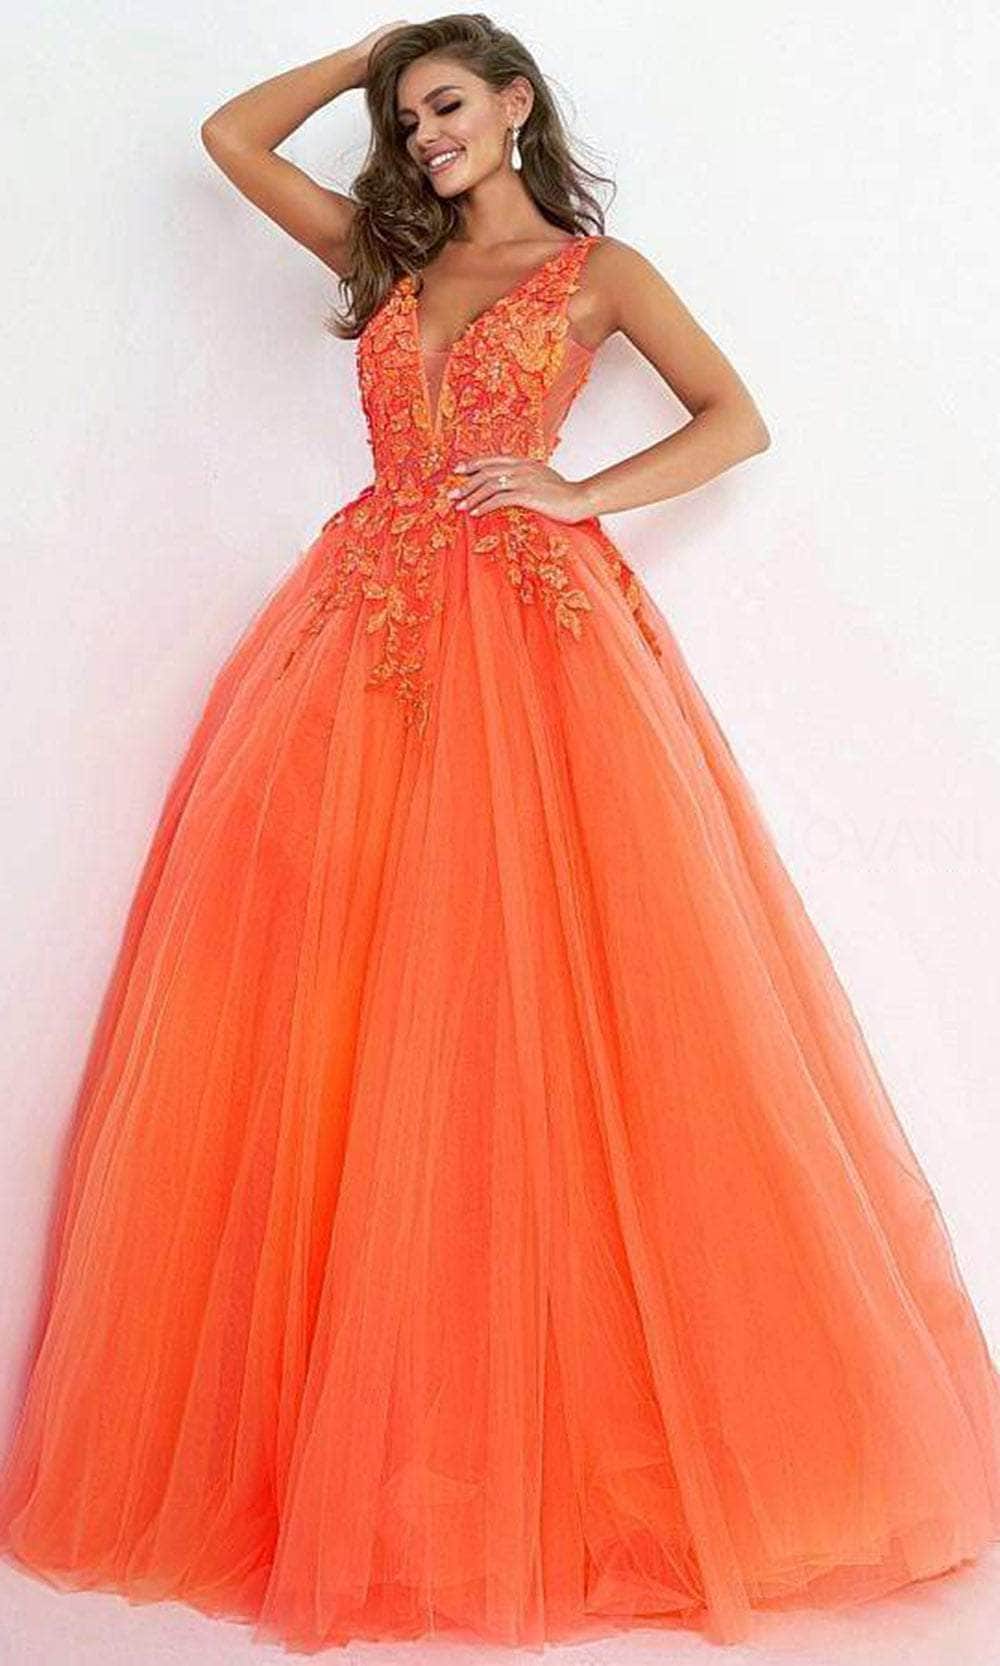 Jovani - 02840 Plunging Neck Floral Applique Tulle Ballgown Ball Gowns 00 / Orange